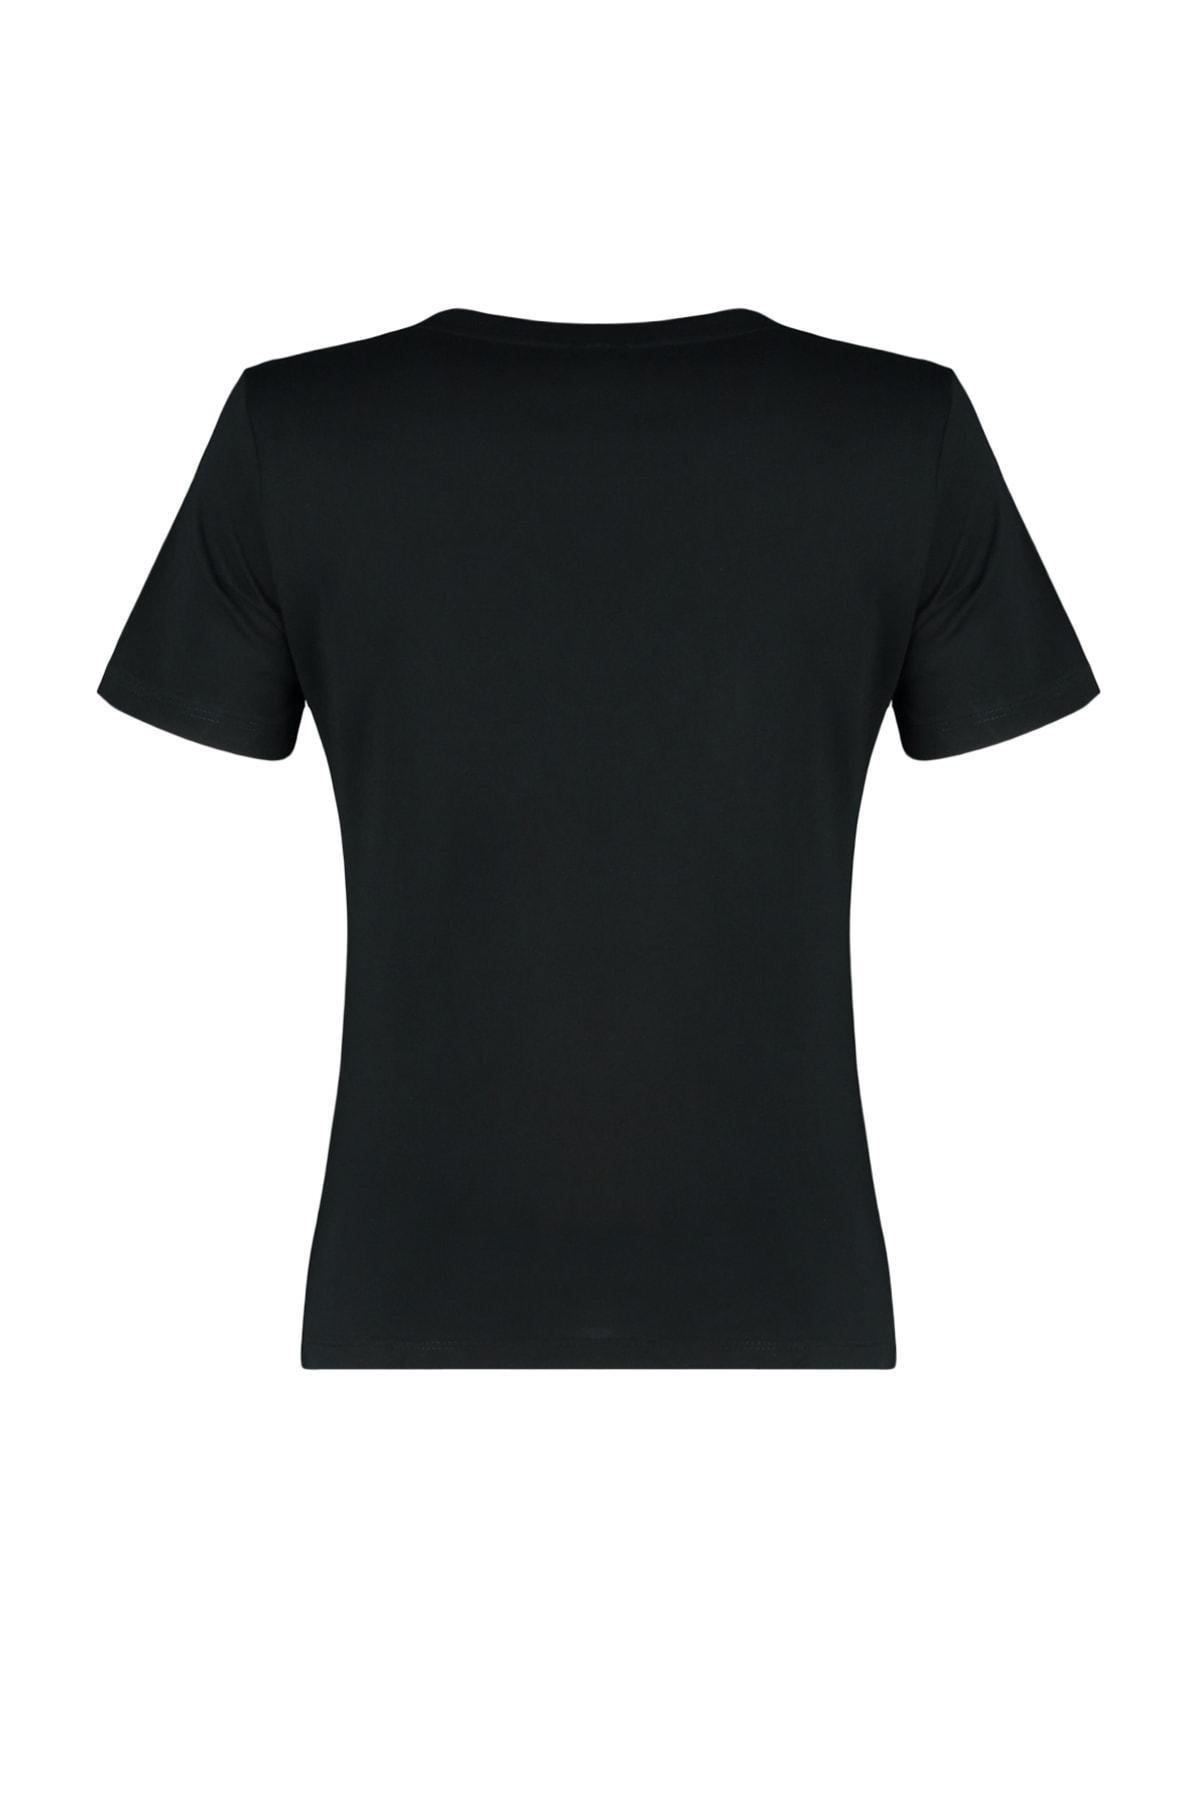 Trendyol - Black Crew Neck T-Shirt